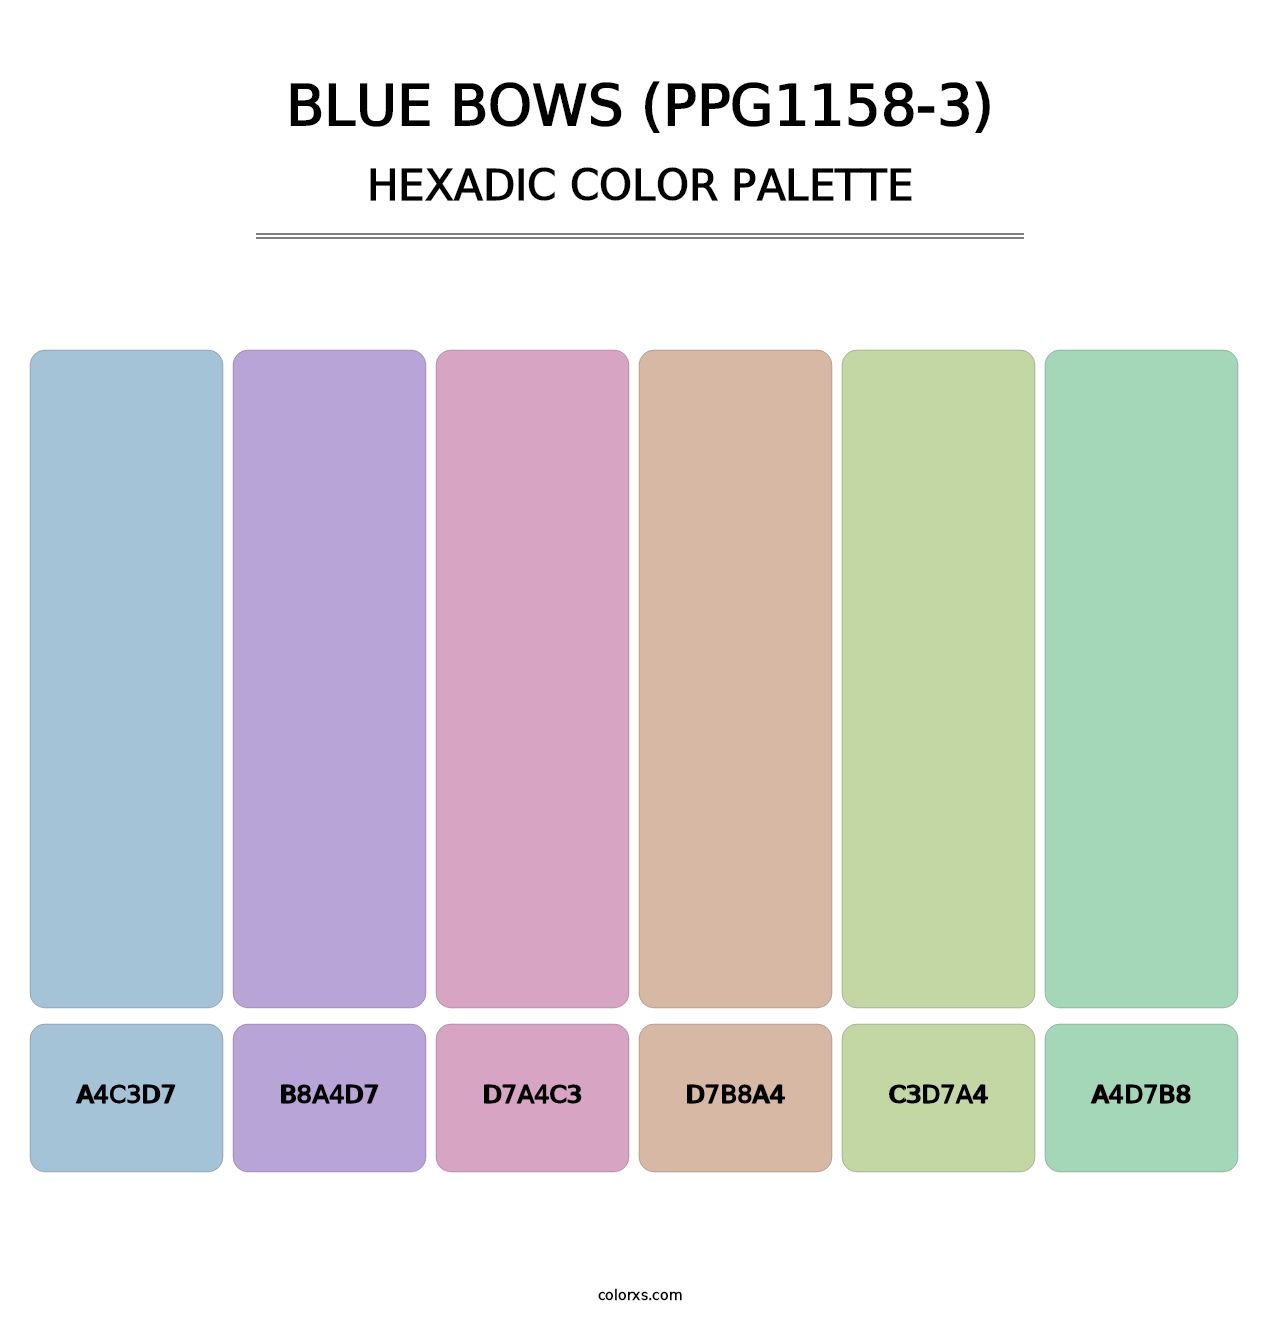 Blue Bows (PPG1158-3) - Hexadic Color Palette